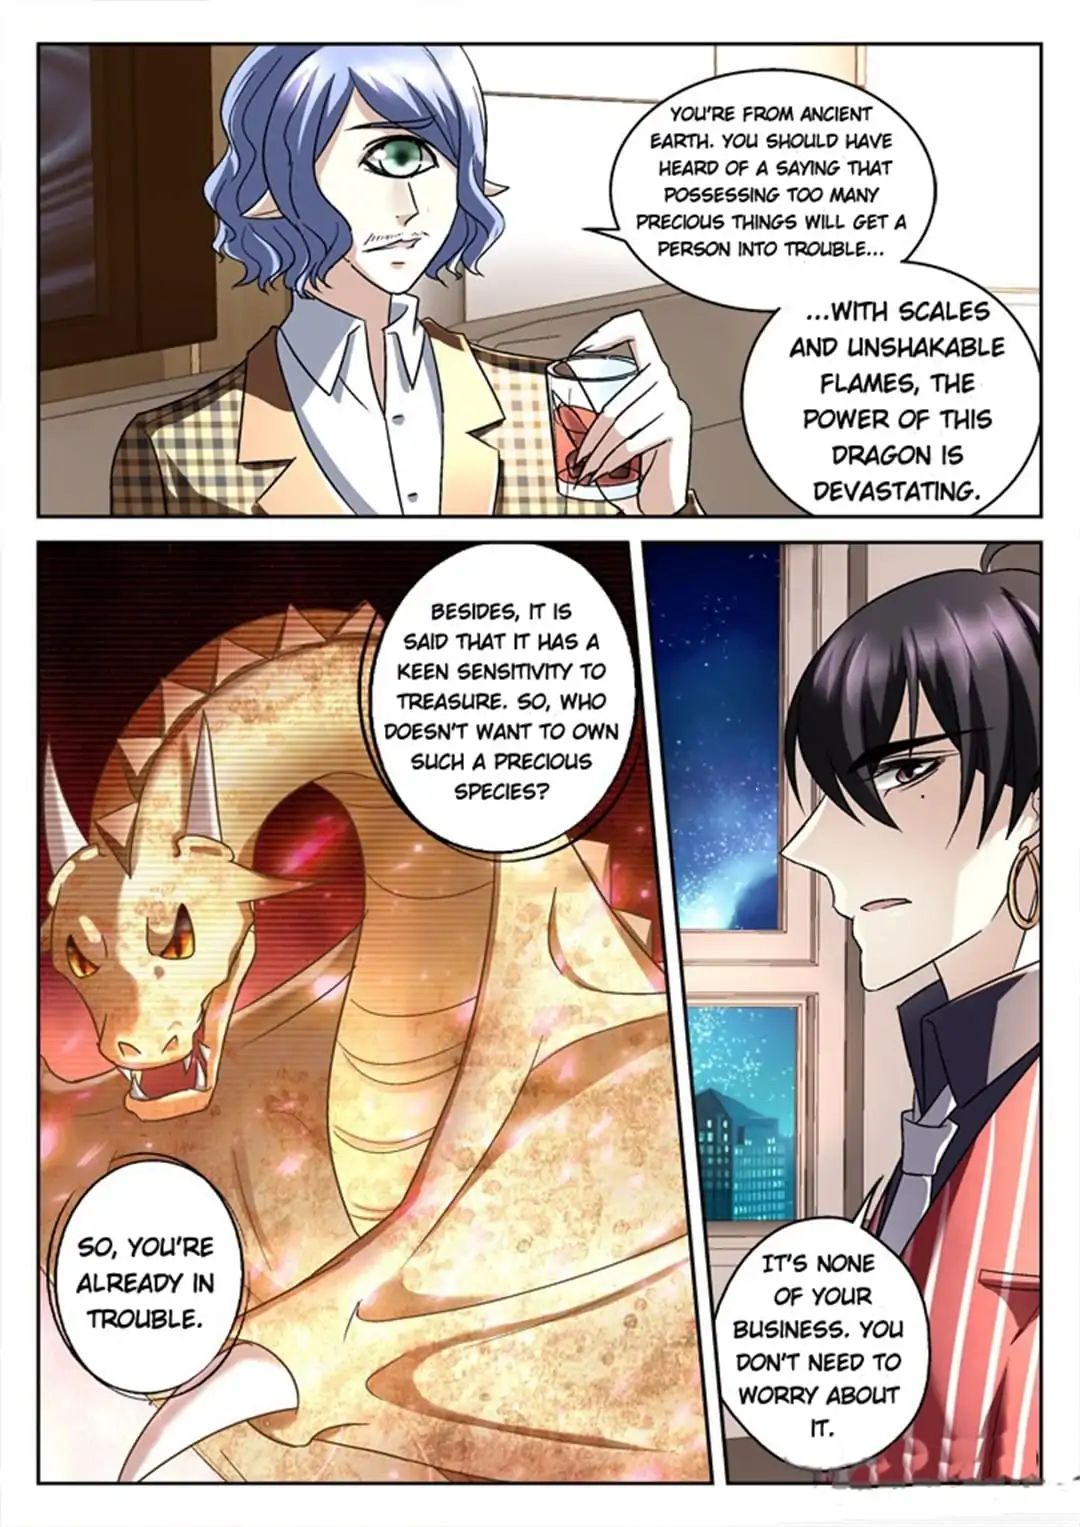 Lost Dragon - Page 2